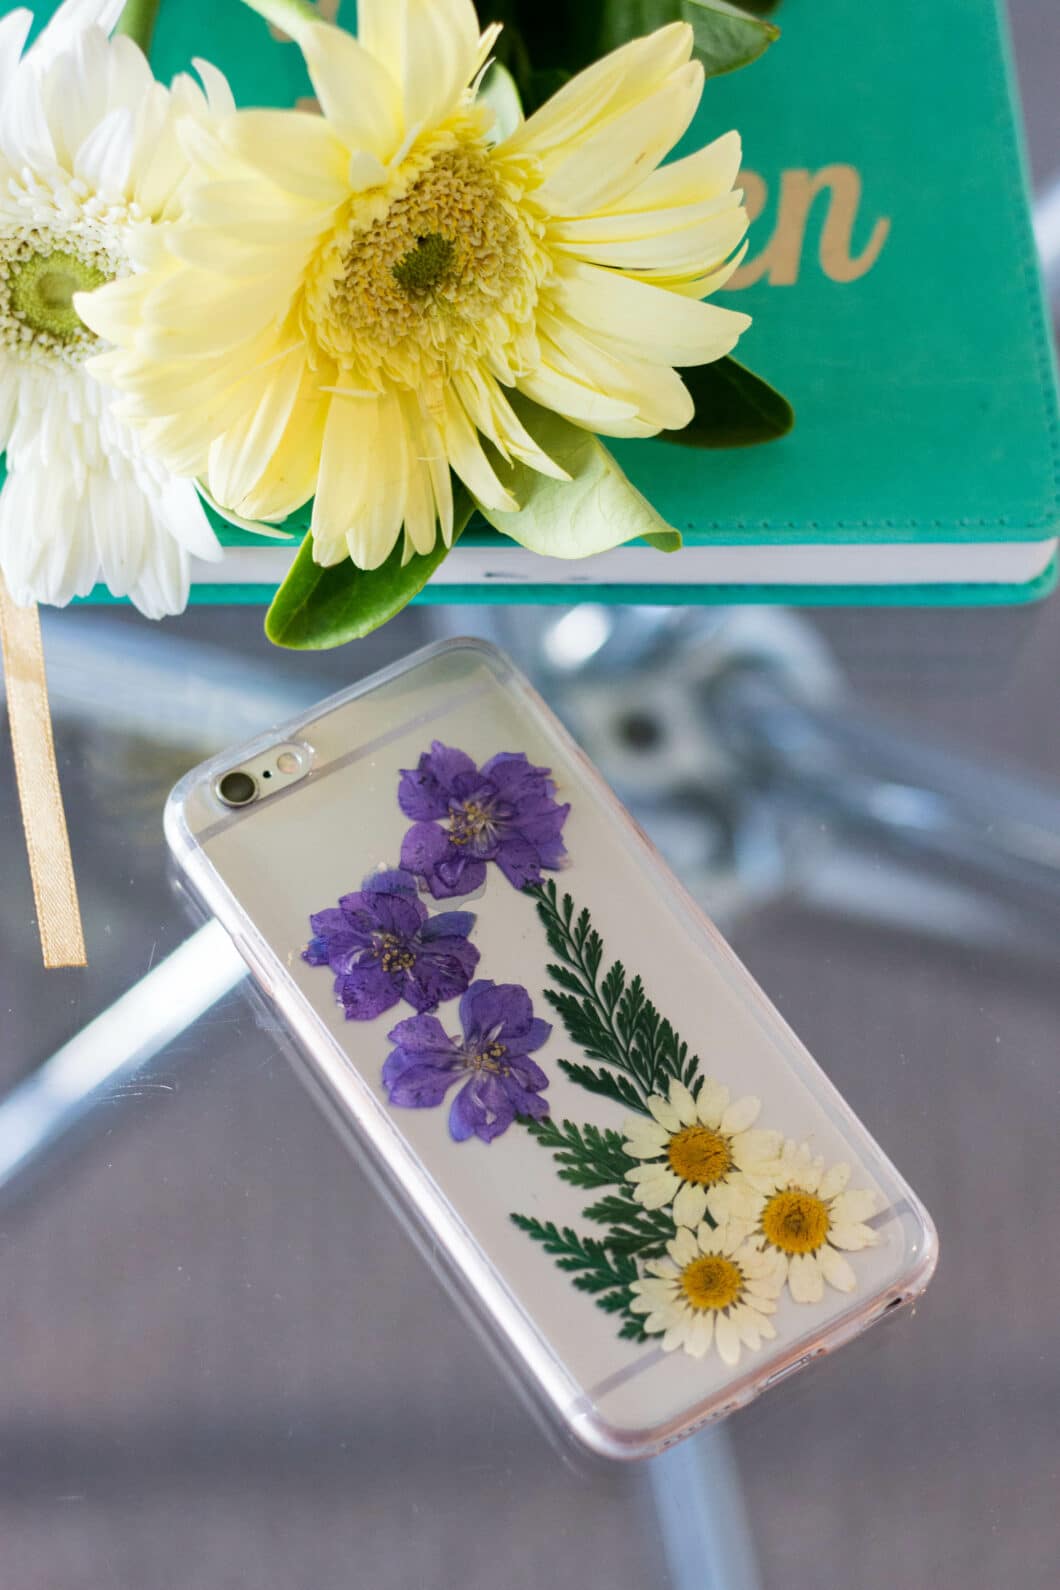 pressed flower phone case